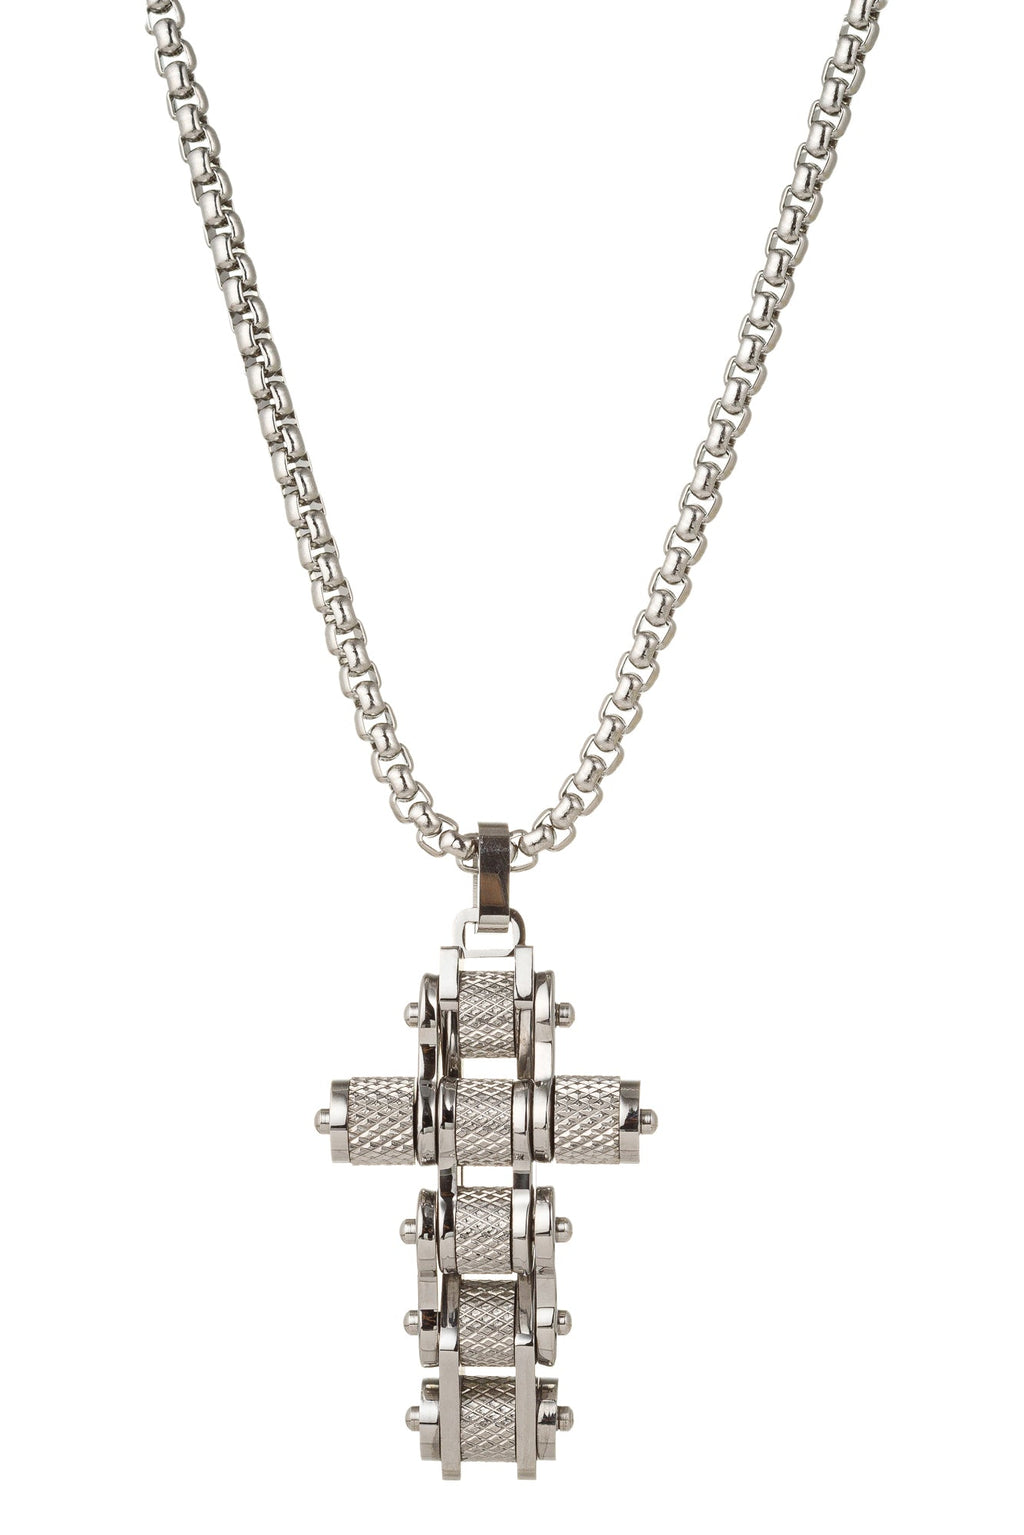 Edwin Titanium Cross Pendant Necklace: A Timeless Symbol of Faith.